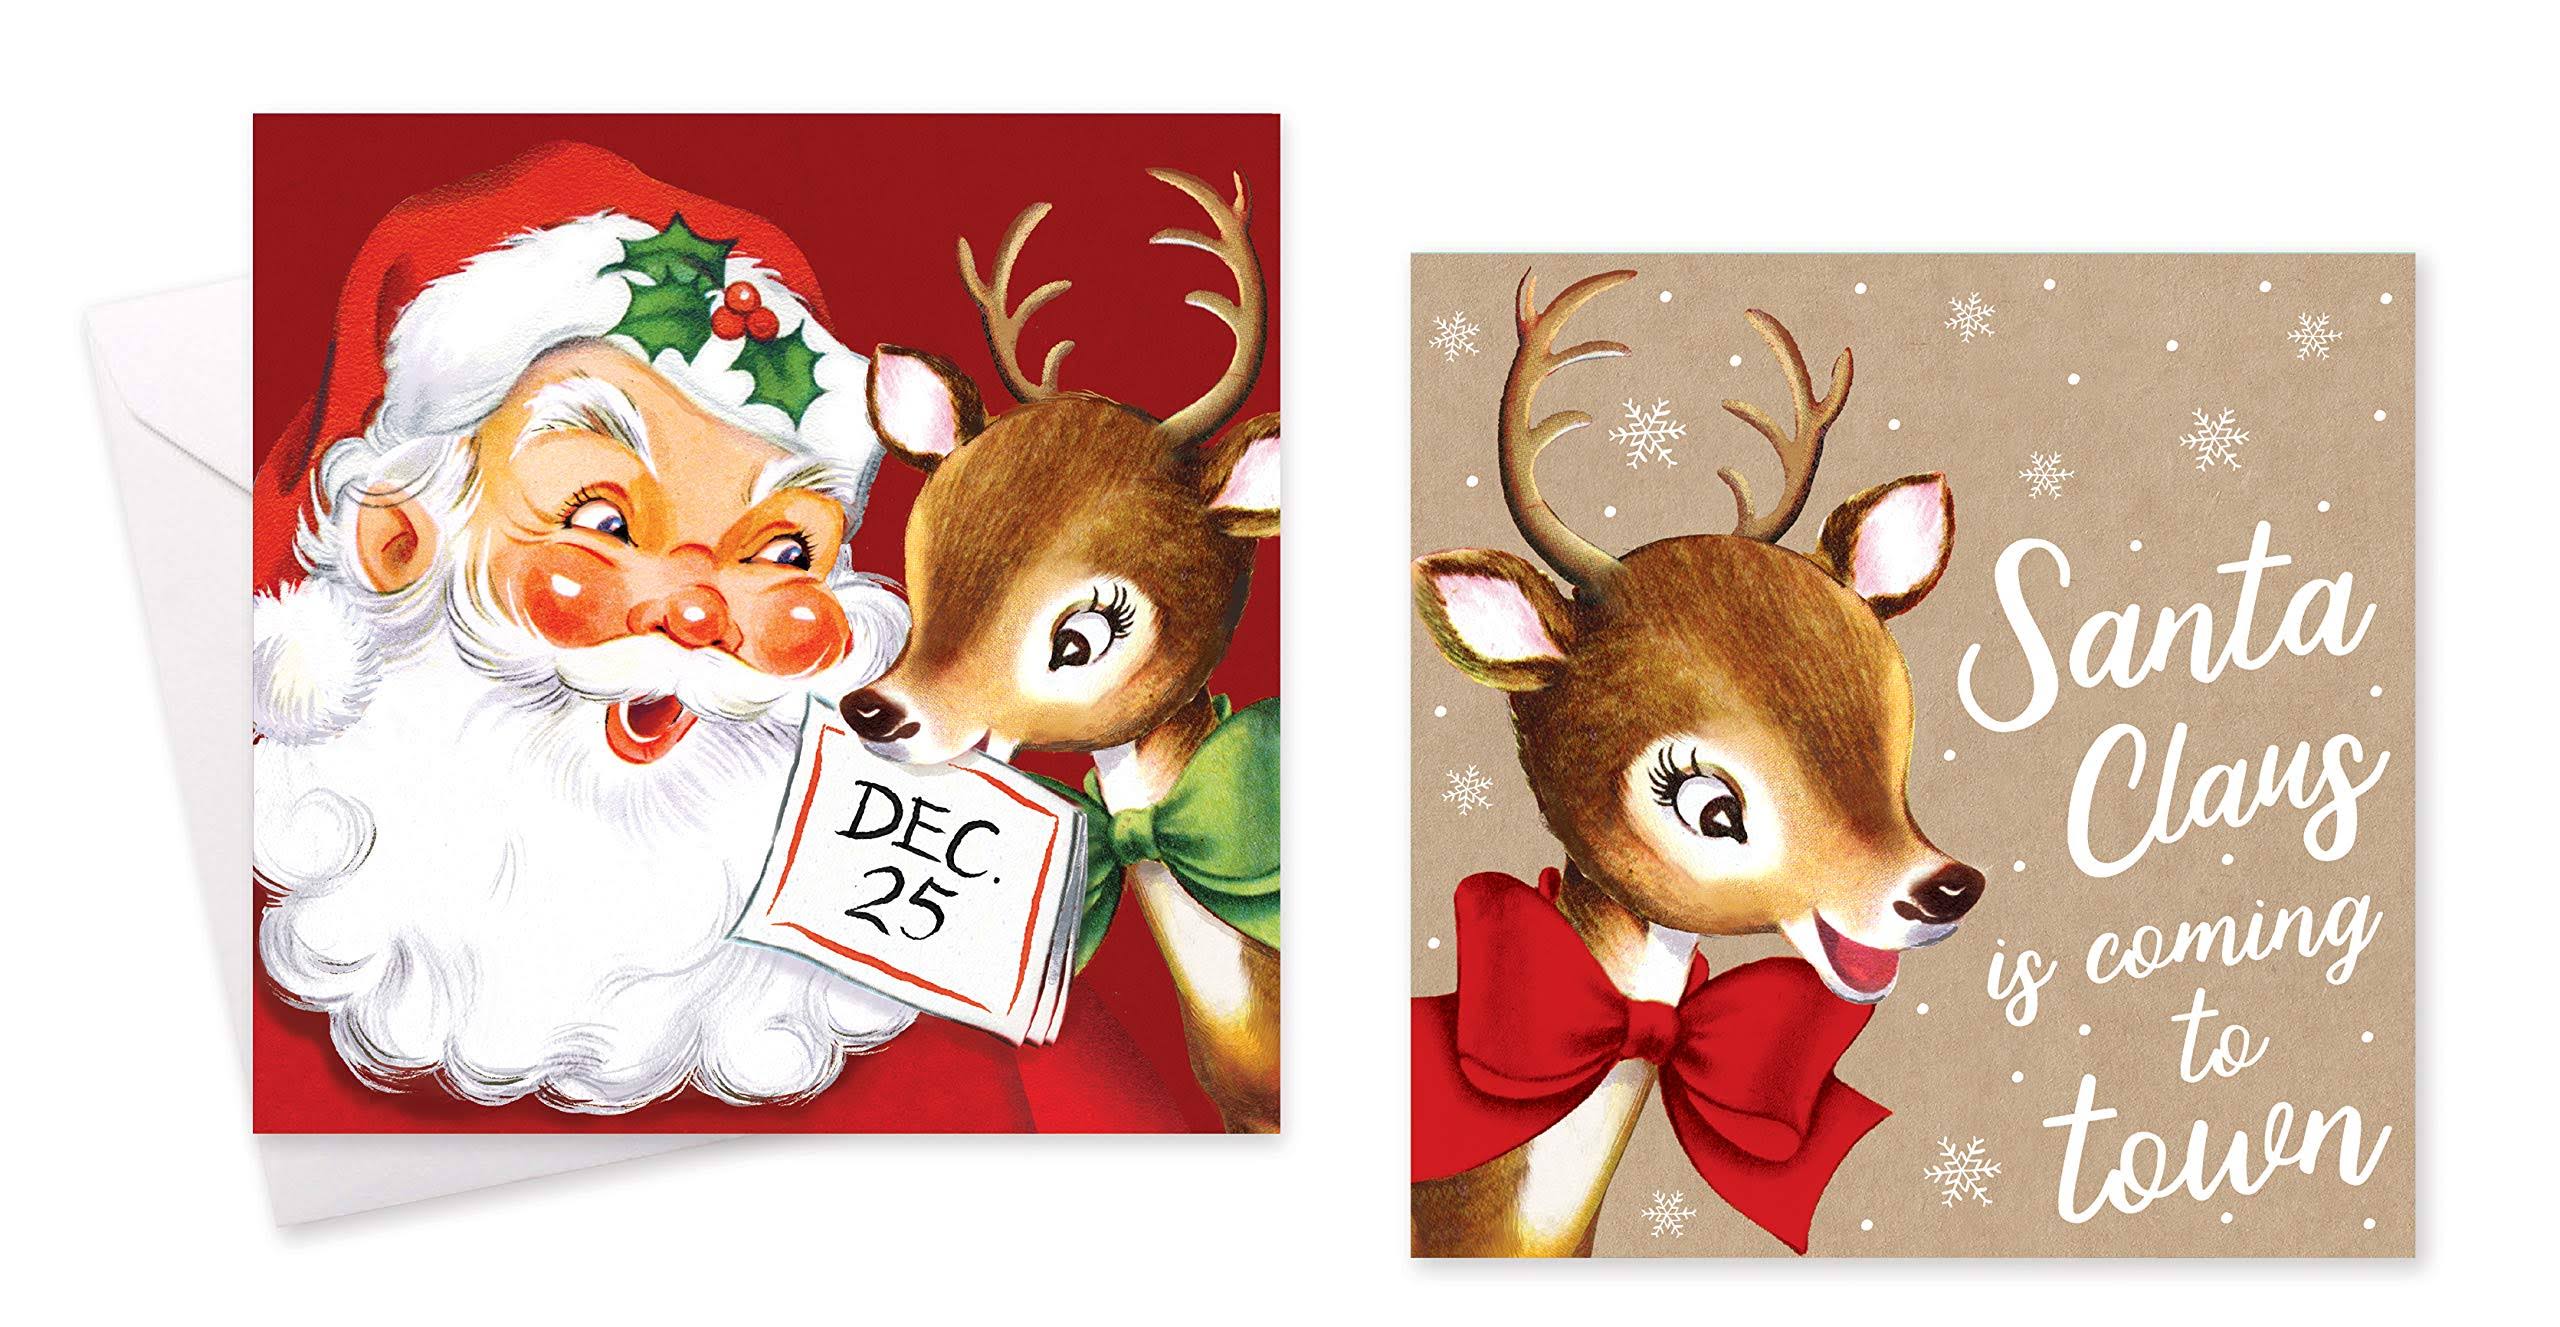 Tallon Square Christmas Cards, Santa & Deer - Box of 10